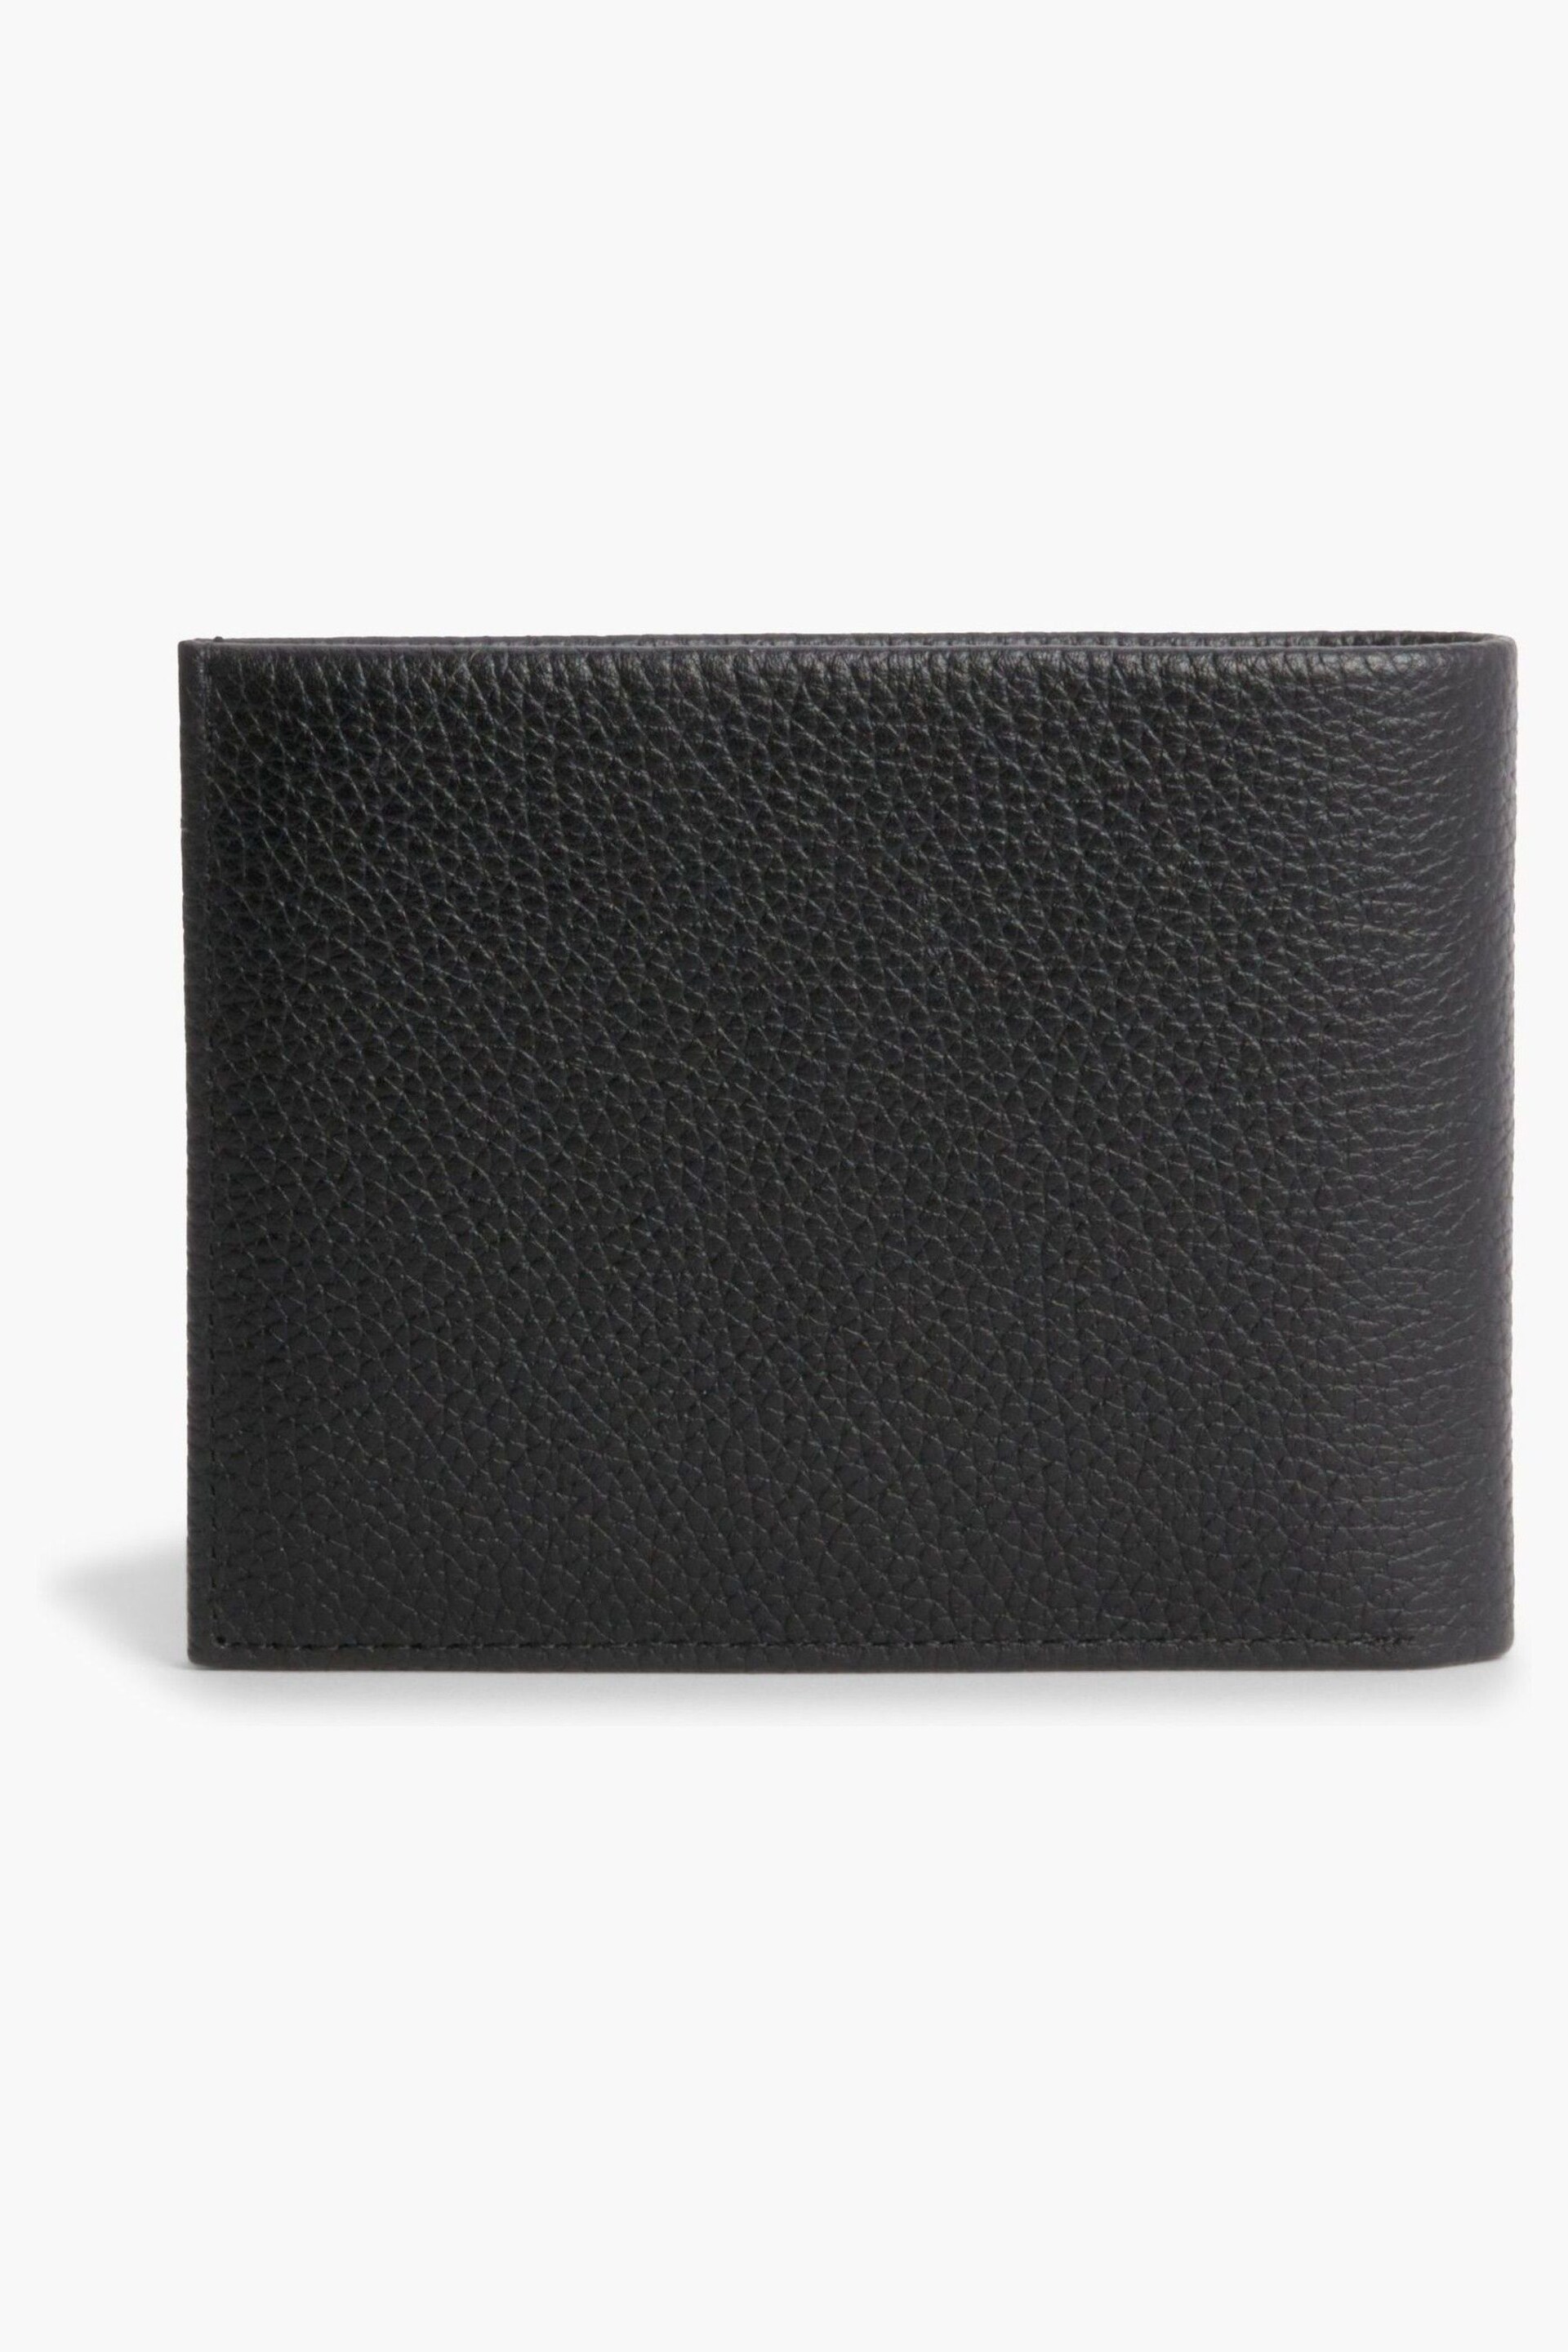 Calvin Klein Black Warmth Leather Bifold Wallet - Image 2 of 3